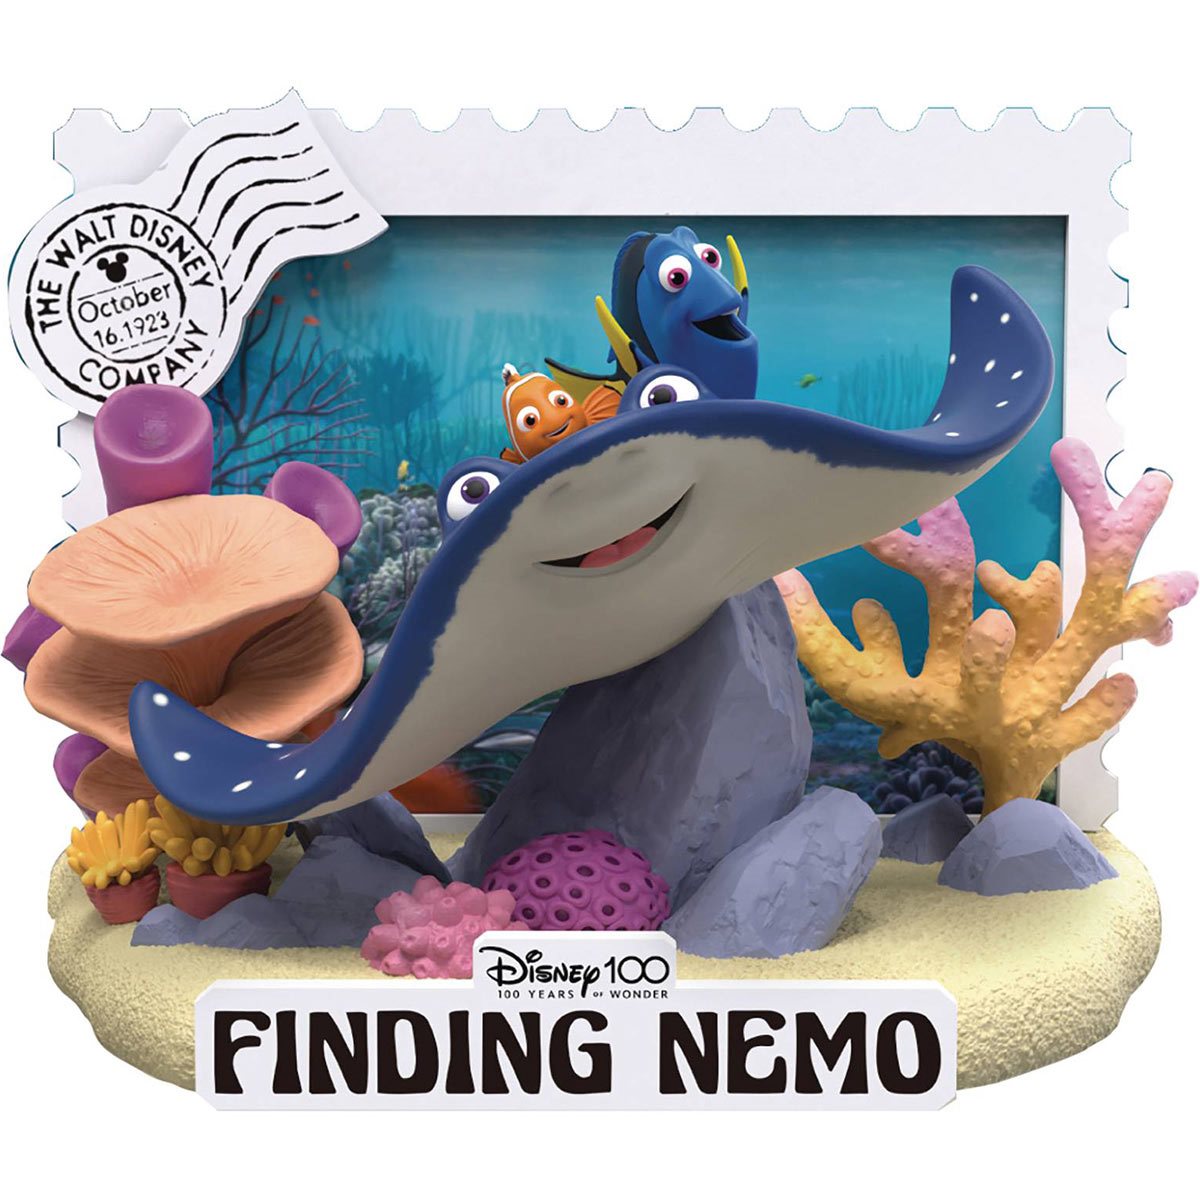 Disney 100 Years of Wonder Finding Nemo D-Stage Statue by Beast Kingdom -Beast Kingdom - India - www.superherotoystore.com